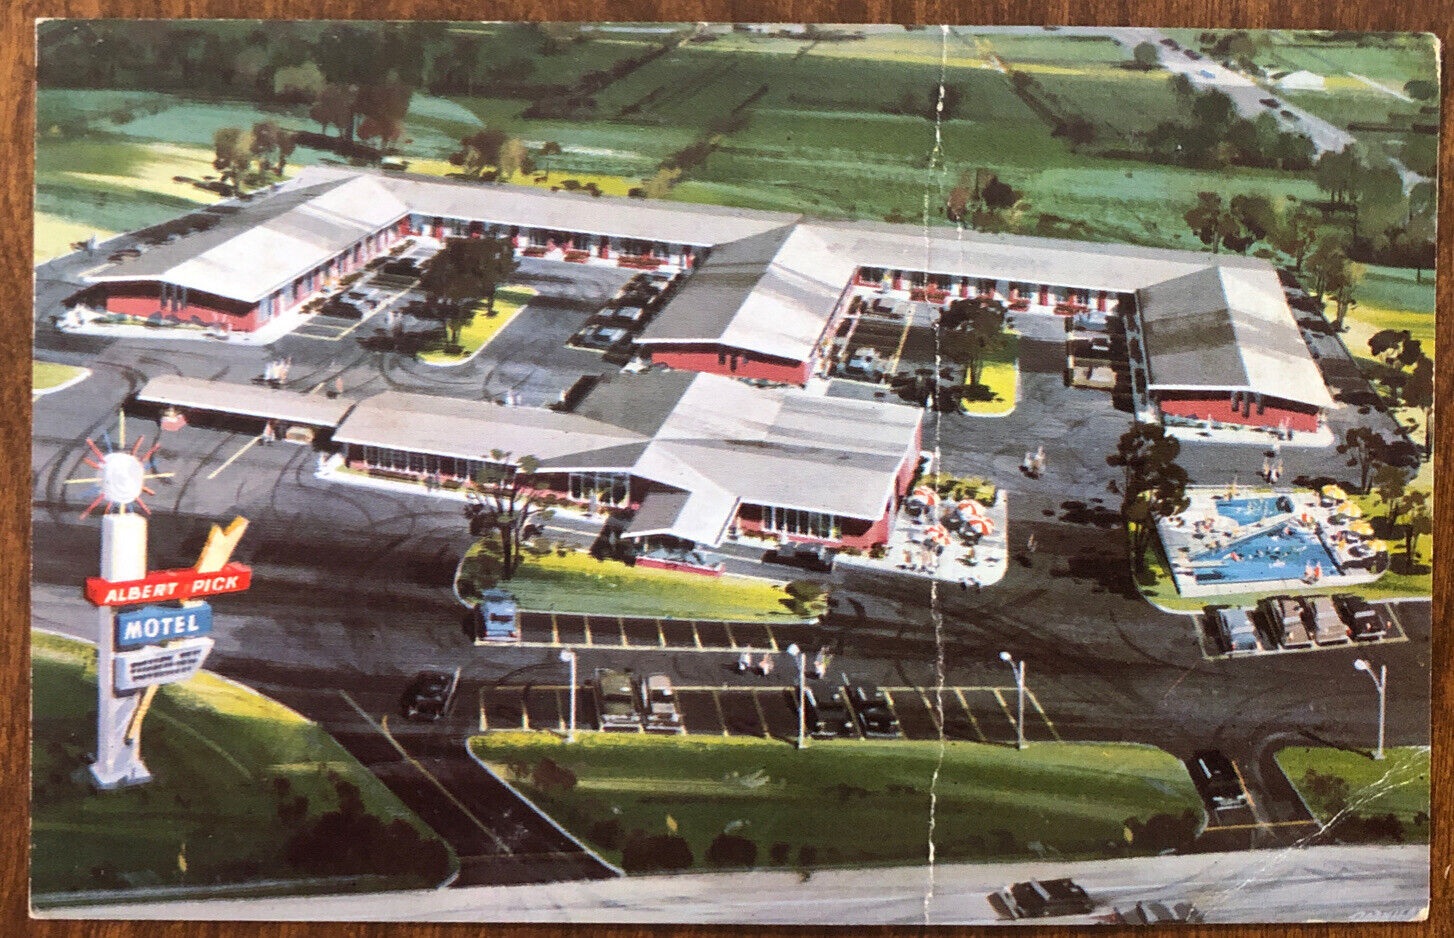 Albert Pick Motel, St Louis MO Missouri, Vintage Postcard Aerial View